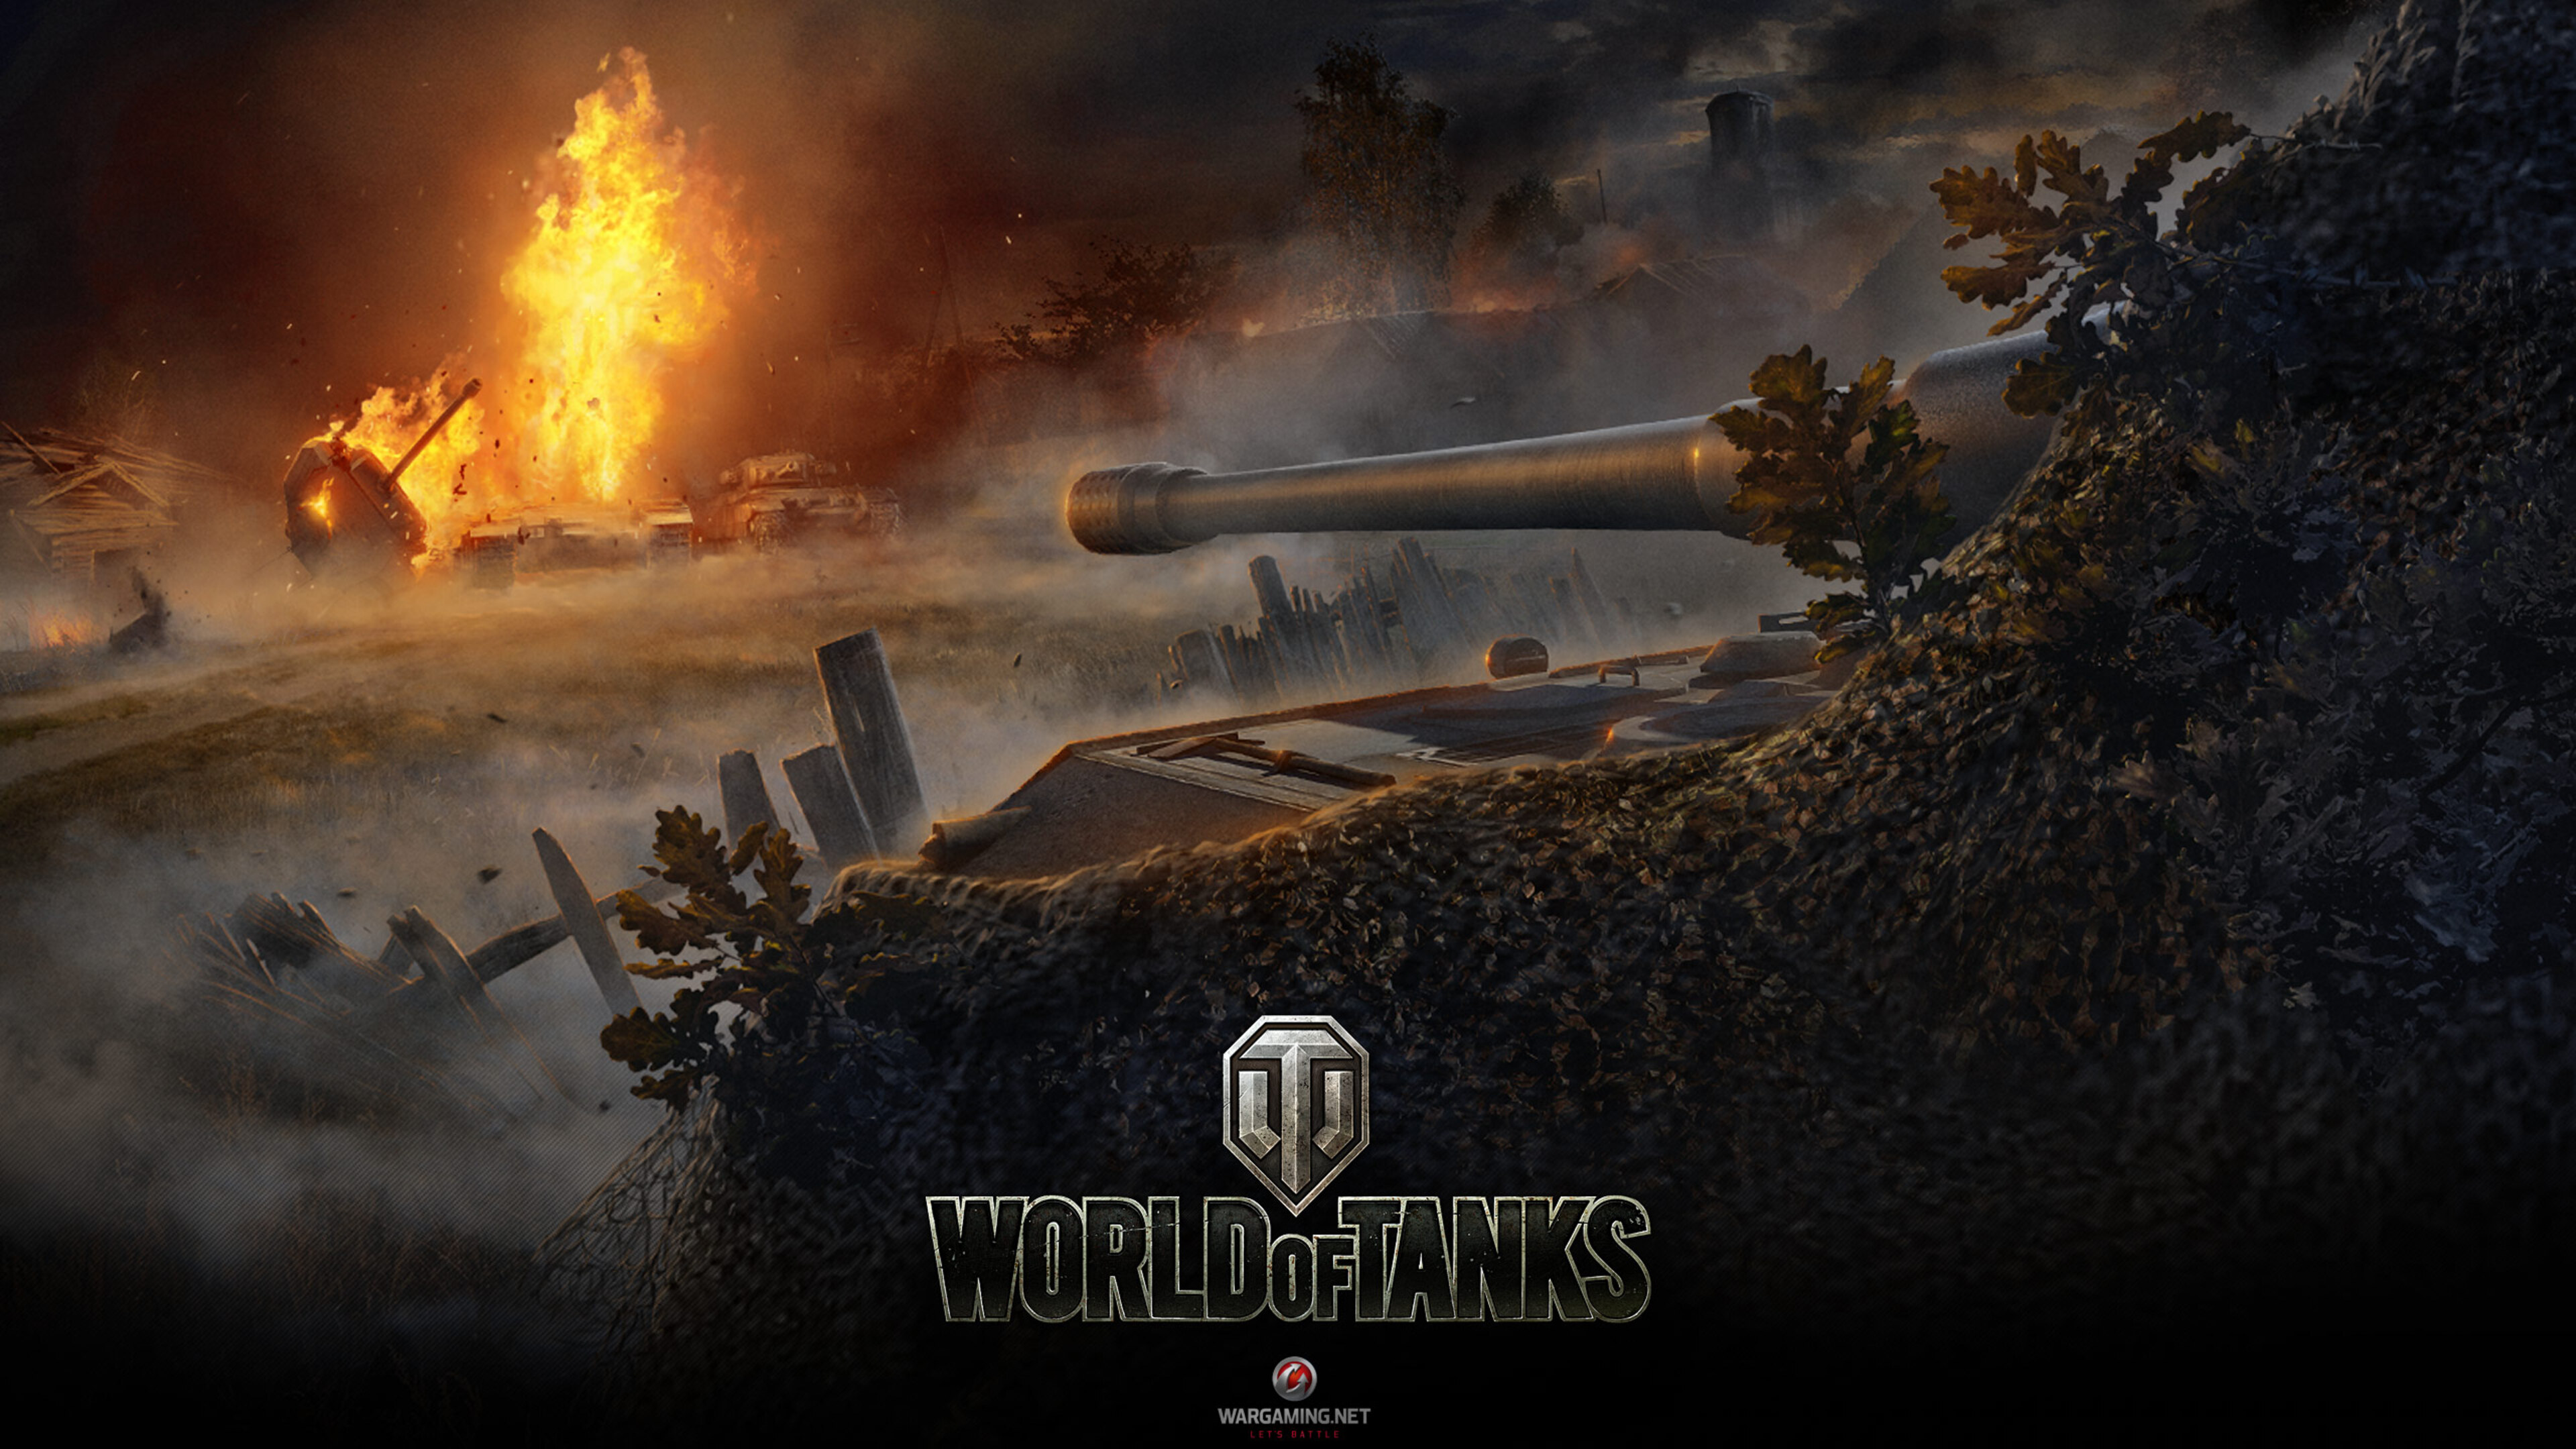 Tanks of worlds фото. Танк World of Tanks. Загрузочный экран ворлд оф танк. Постер ворлд оф танк.